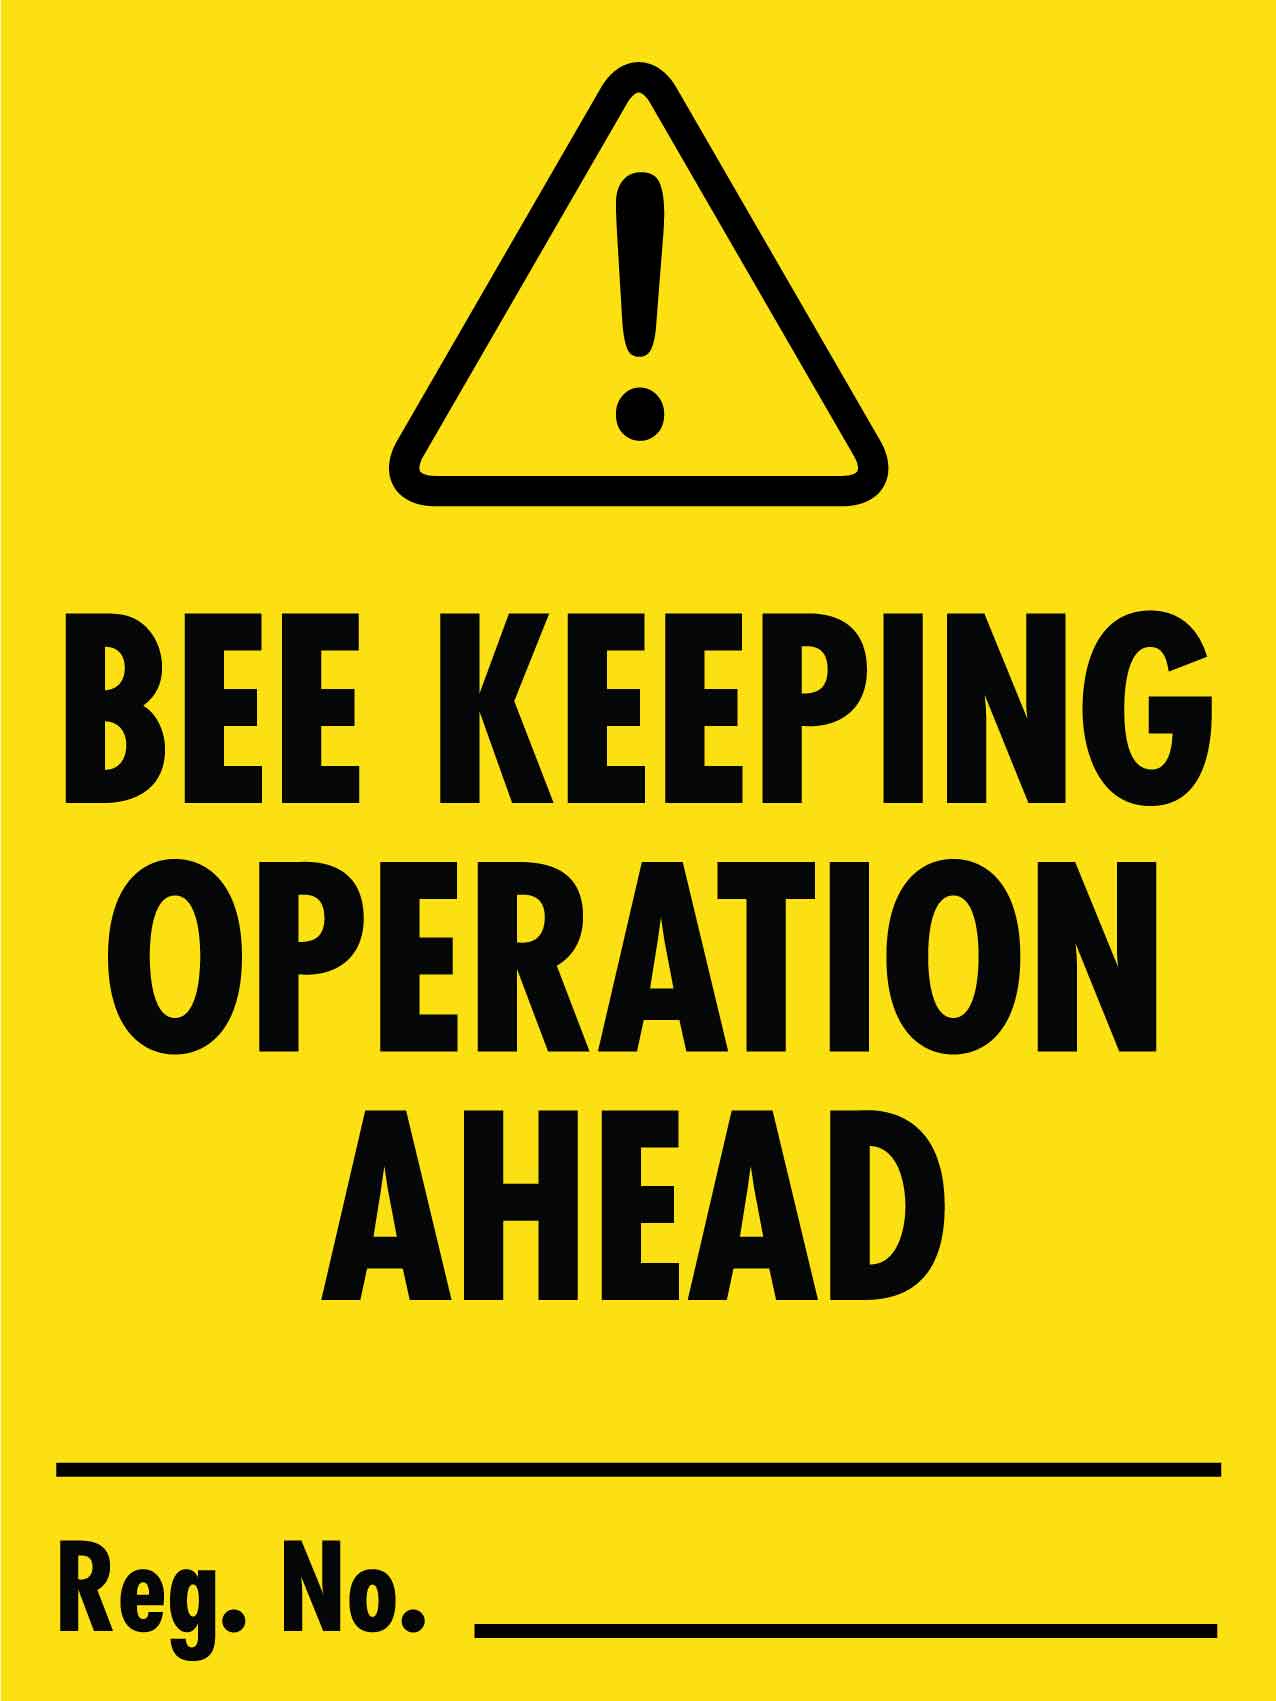 Bee Keeping Operation Ahead Sign